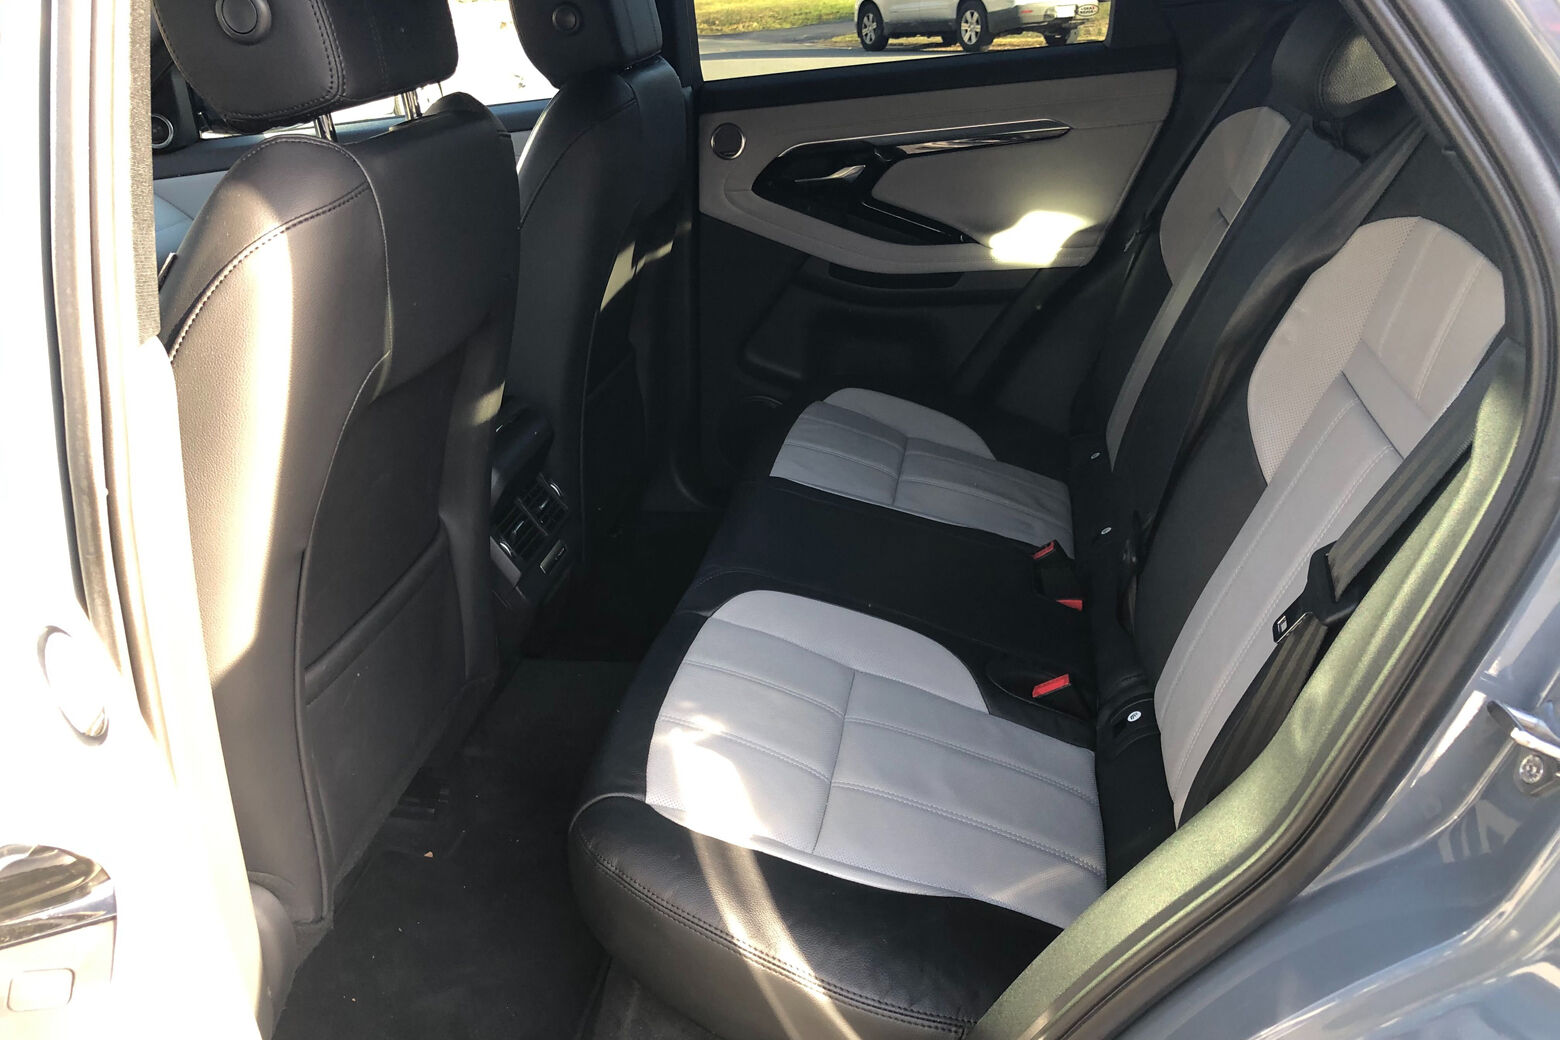 Interior of 2020 Range Rover Evoque.